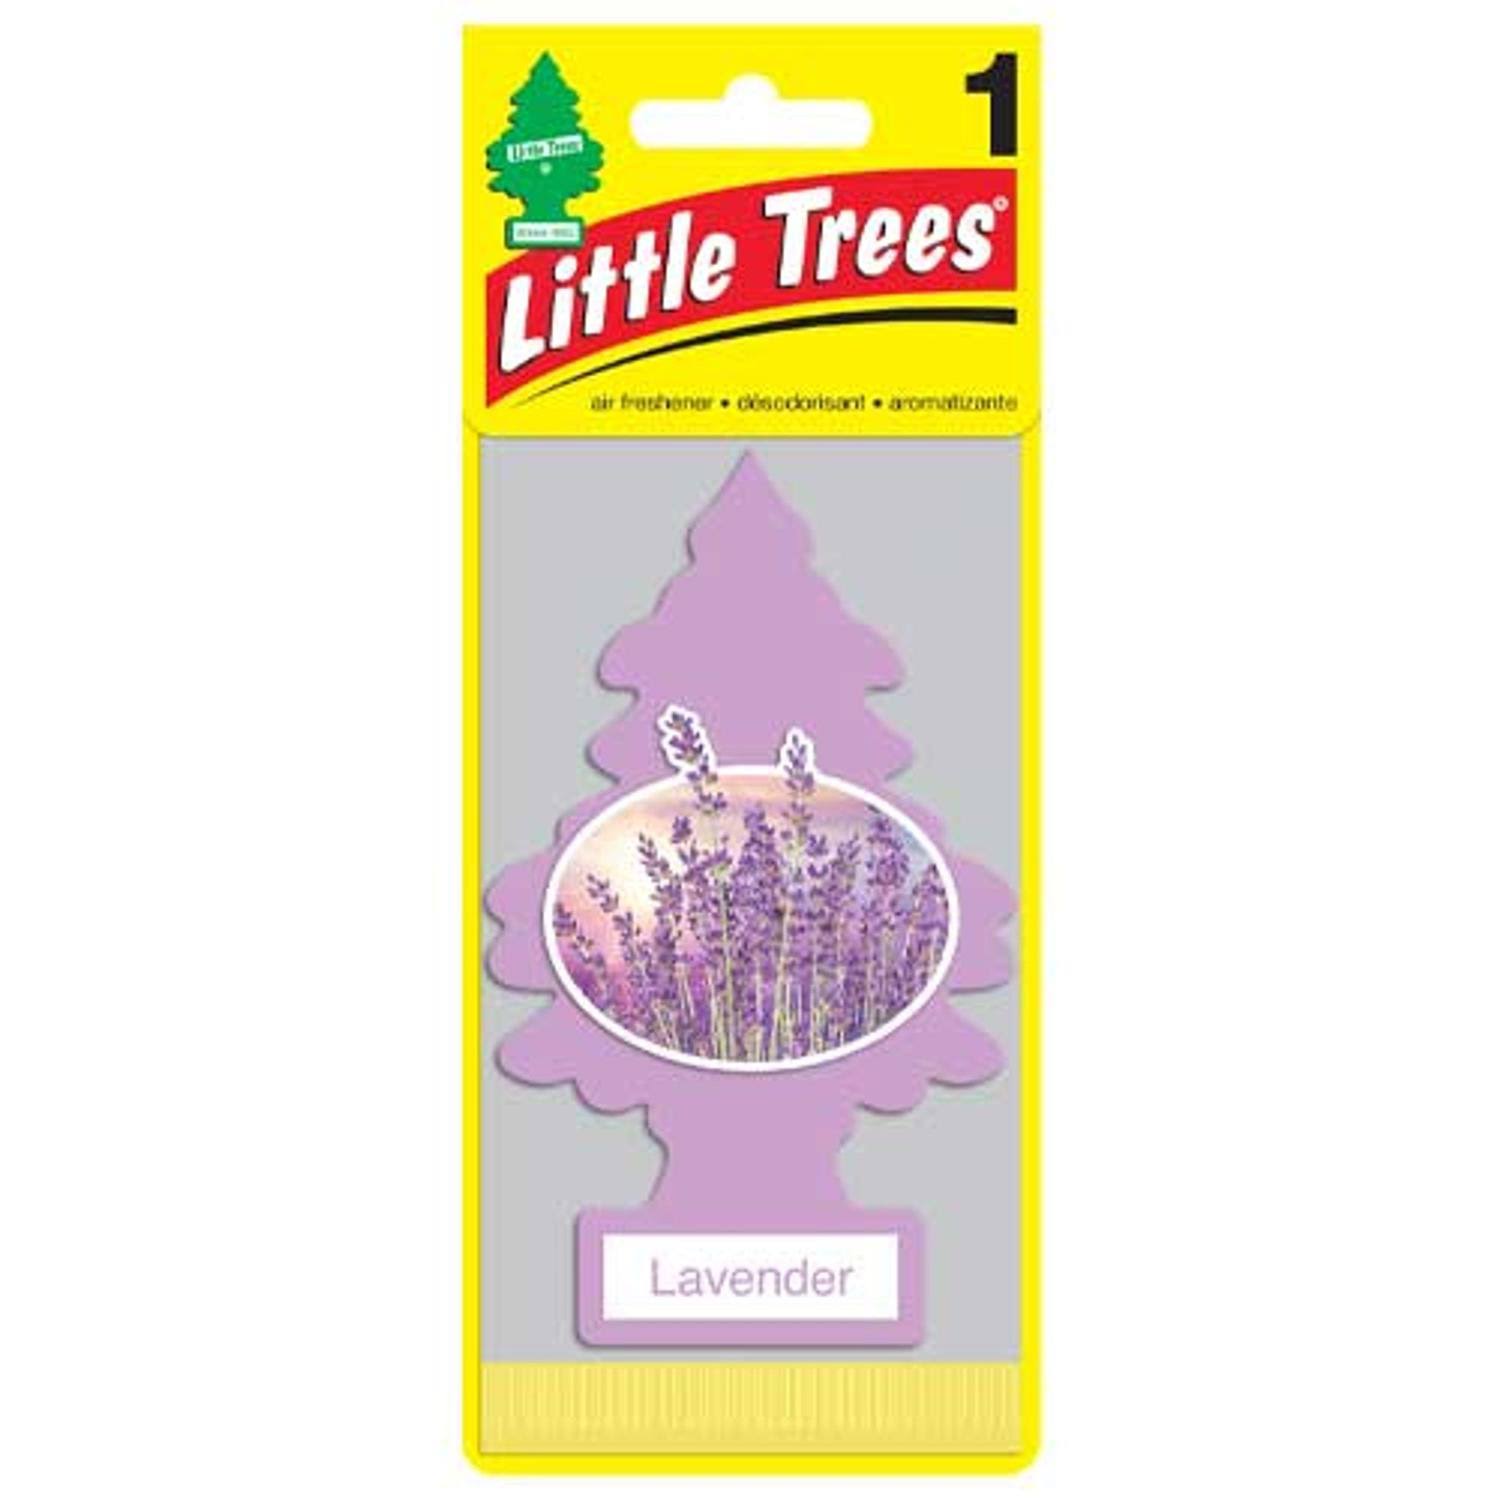 Little Trees Car Air Freshener - Lavender